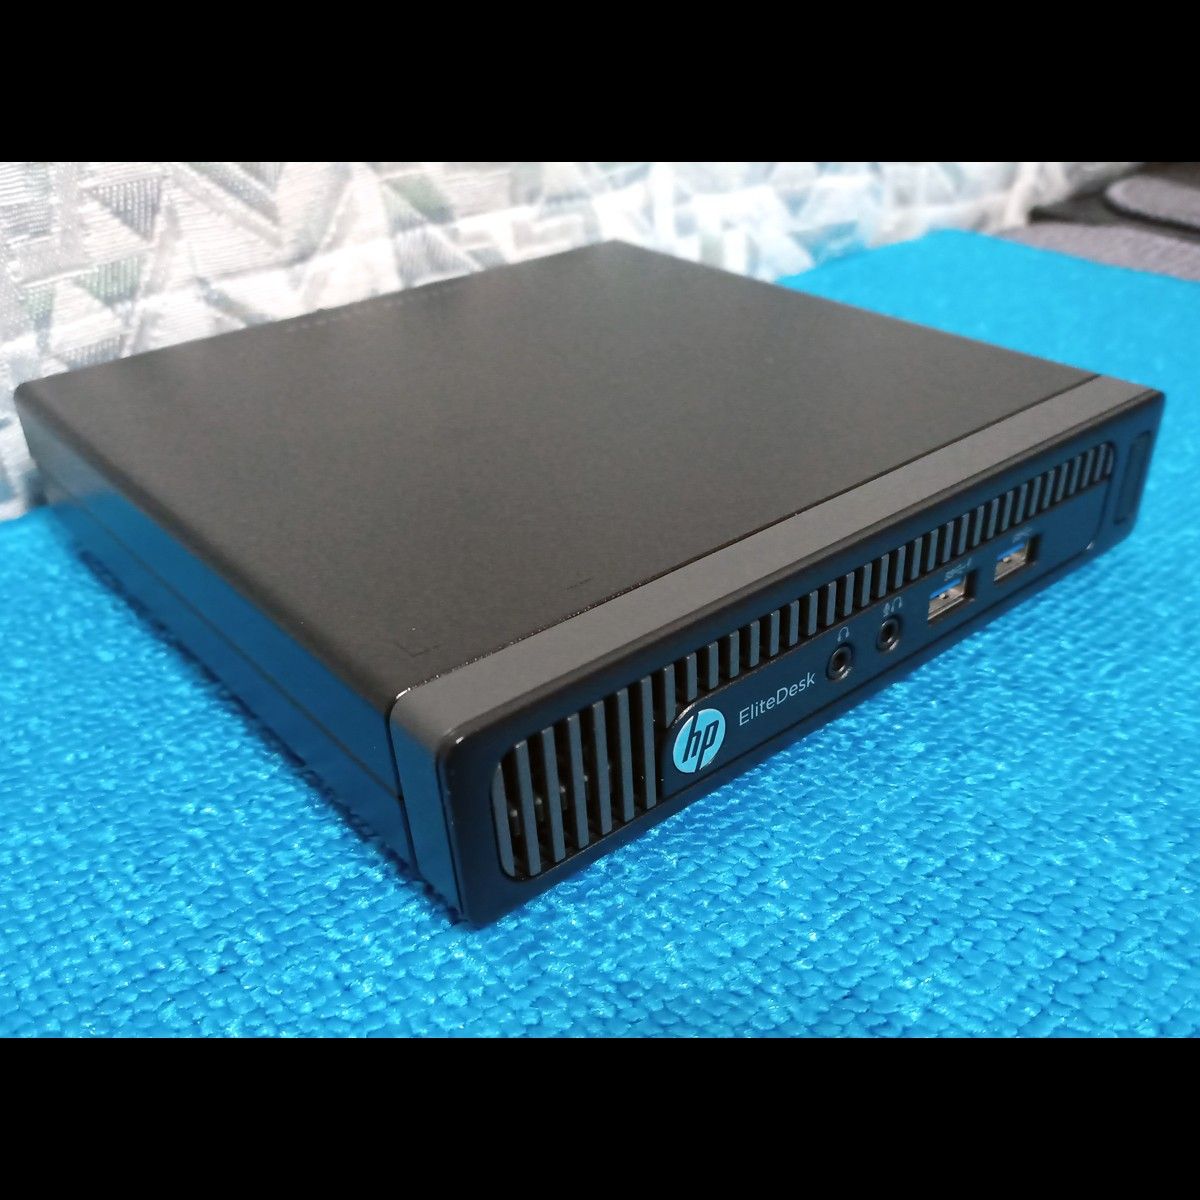 【HP デスクトップPC】EliteDesk800 G1 DM【小型 マイクロ】